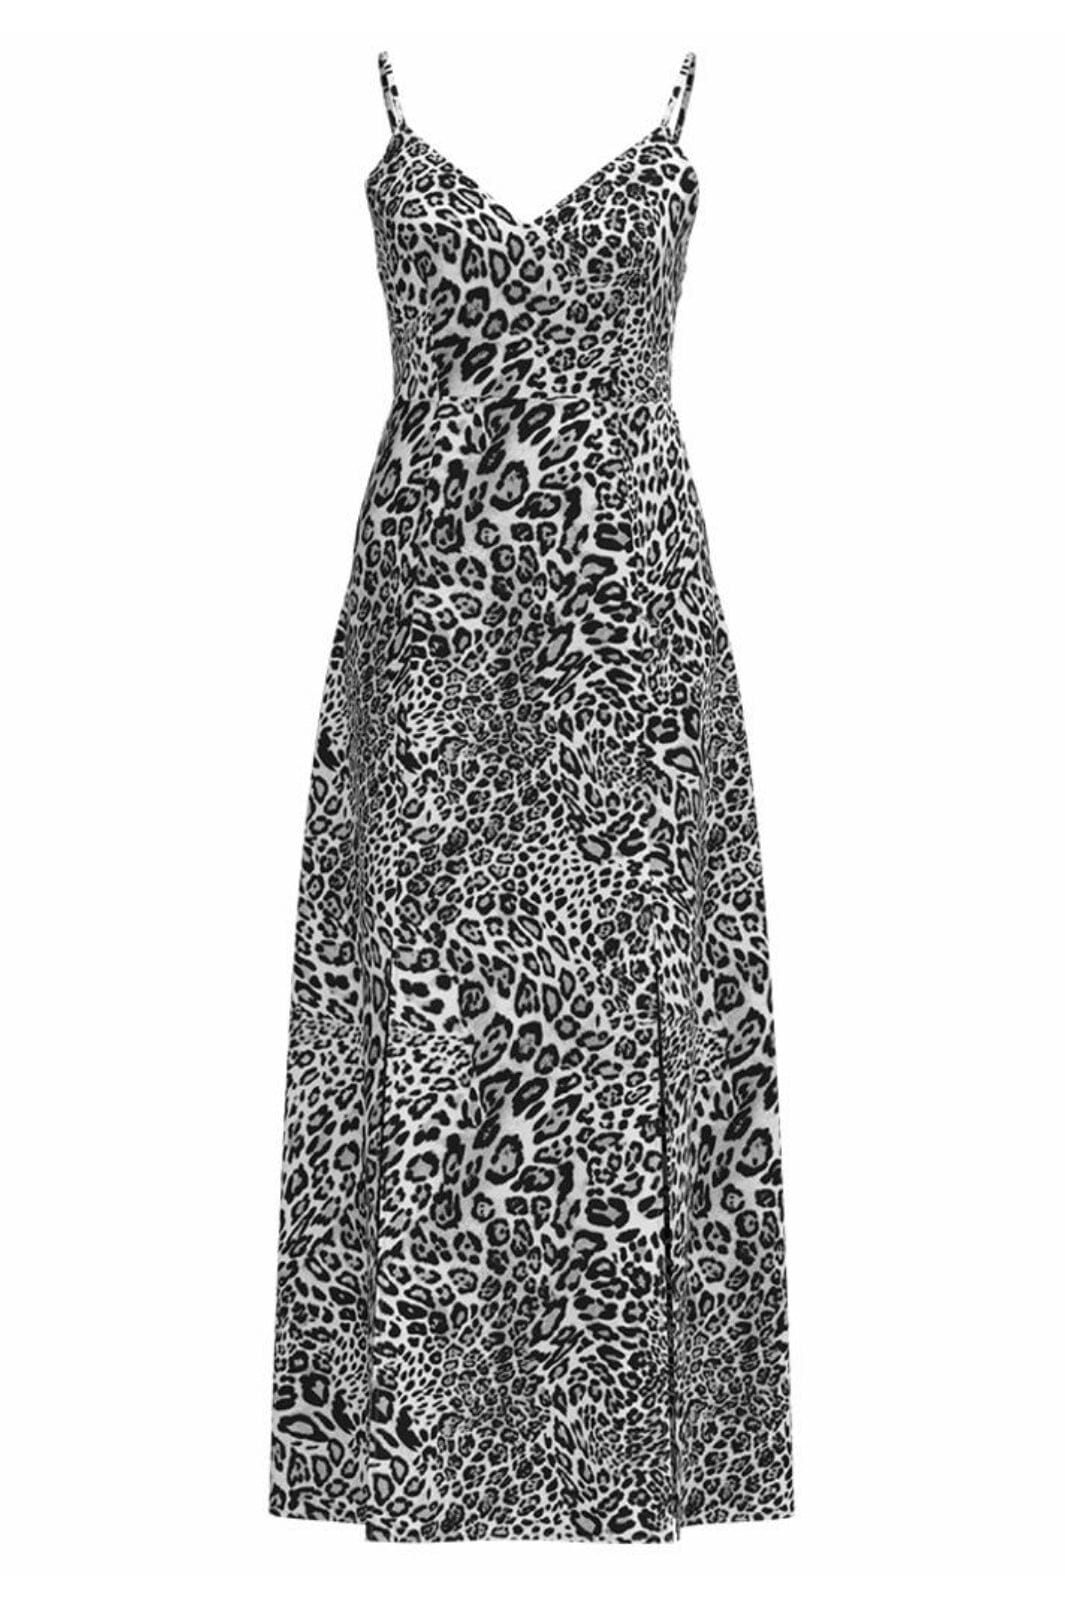 Gossia - Anekago Dress - Grey Leopard Kjoler 